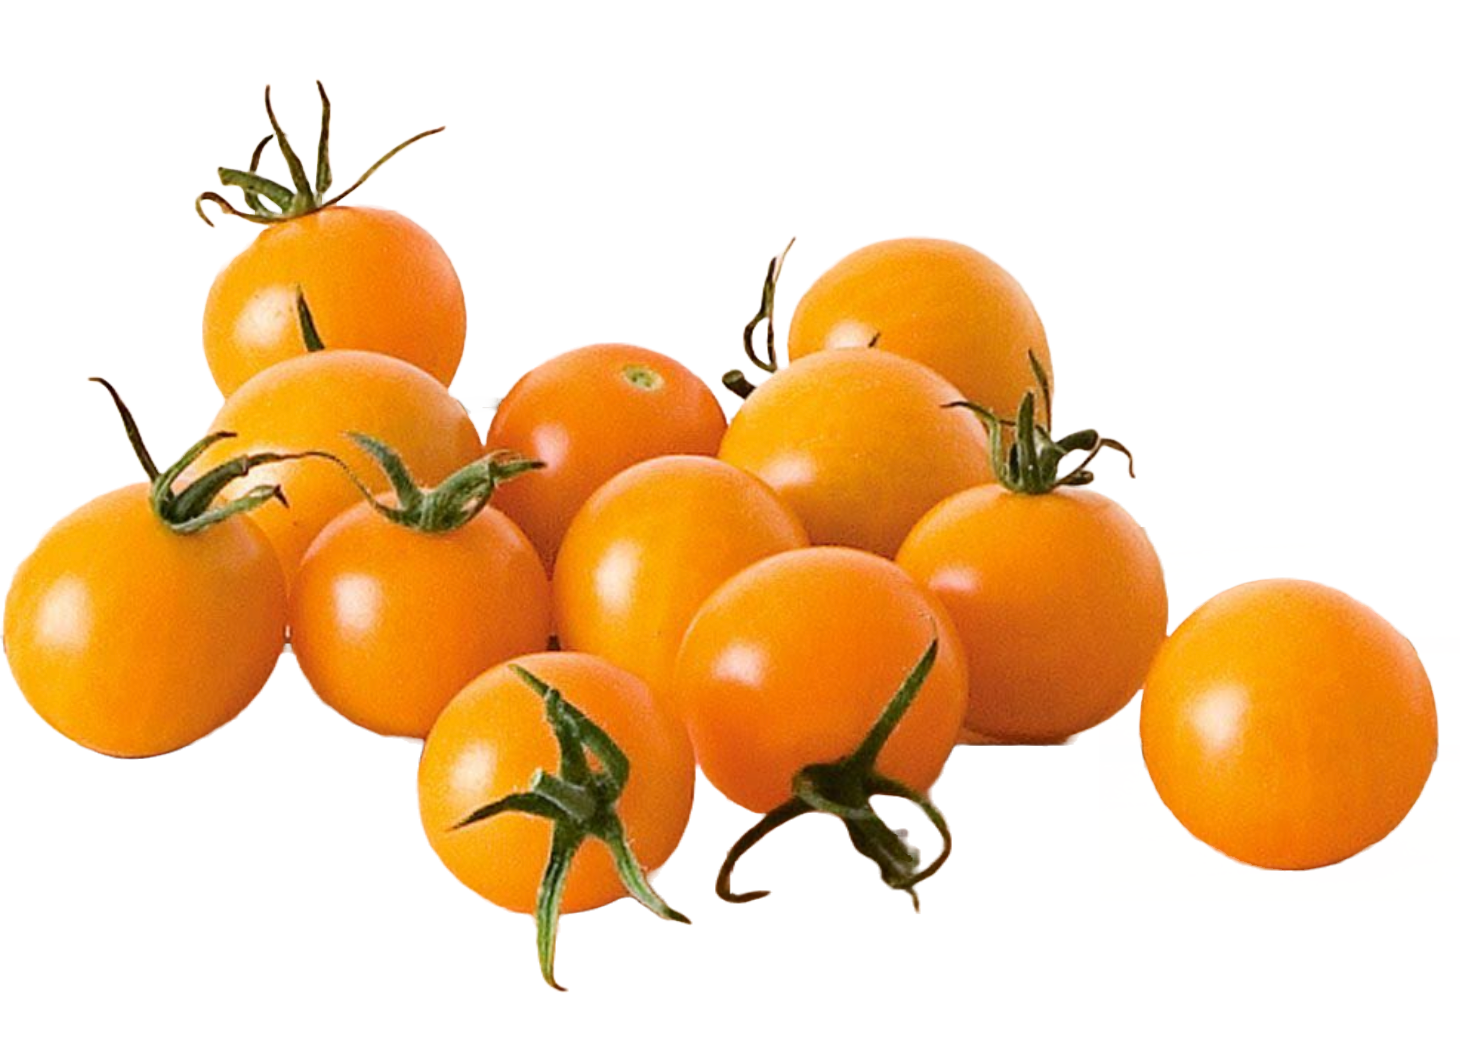 sunsugar tomatoes